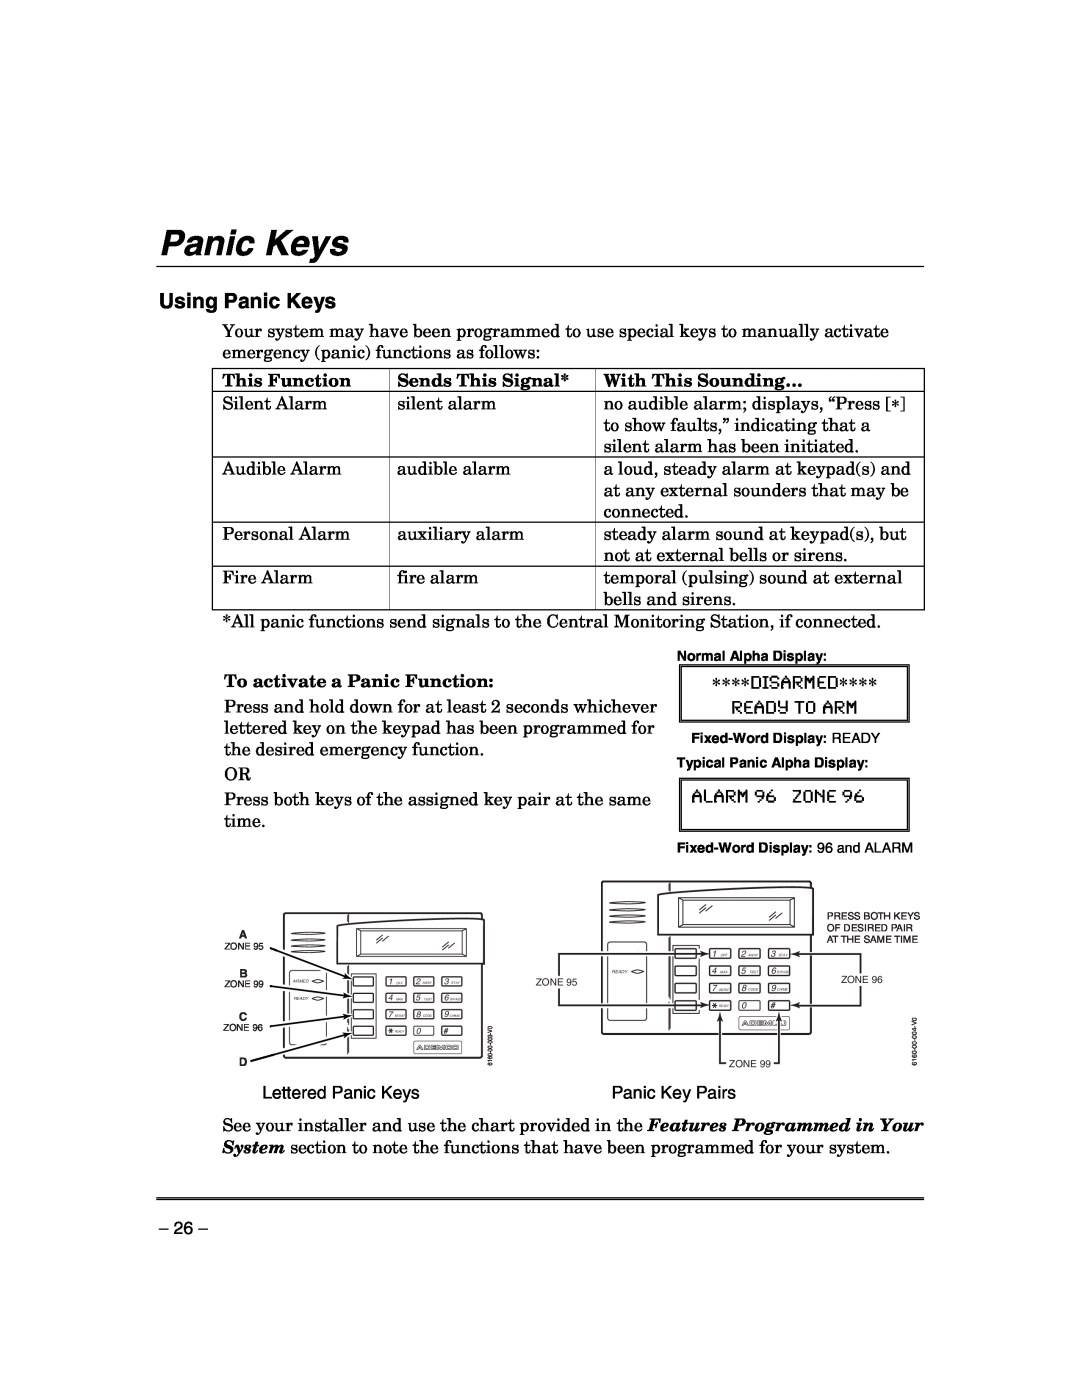 Honeywell VISTA-21IPSIA manual Using Panic Keys, ALARM 96 ZONE, This Function, Sends This Signal, With This Sounding… 